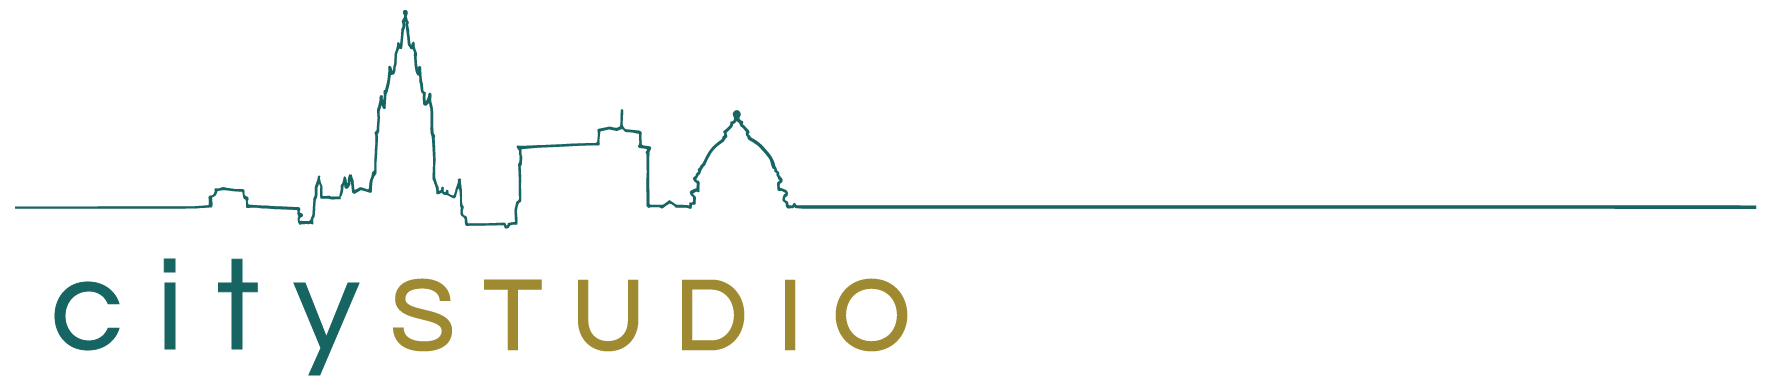 citySTUDIO logo